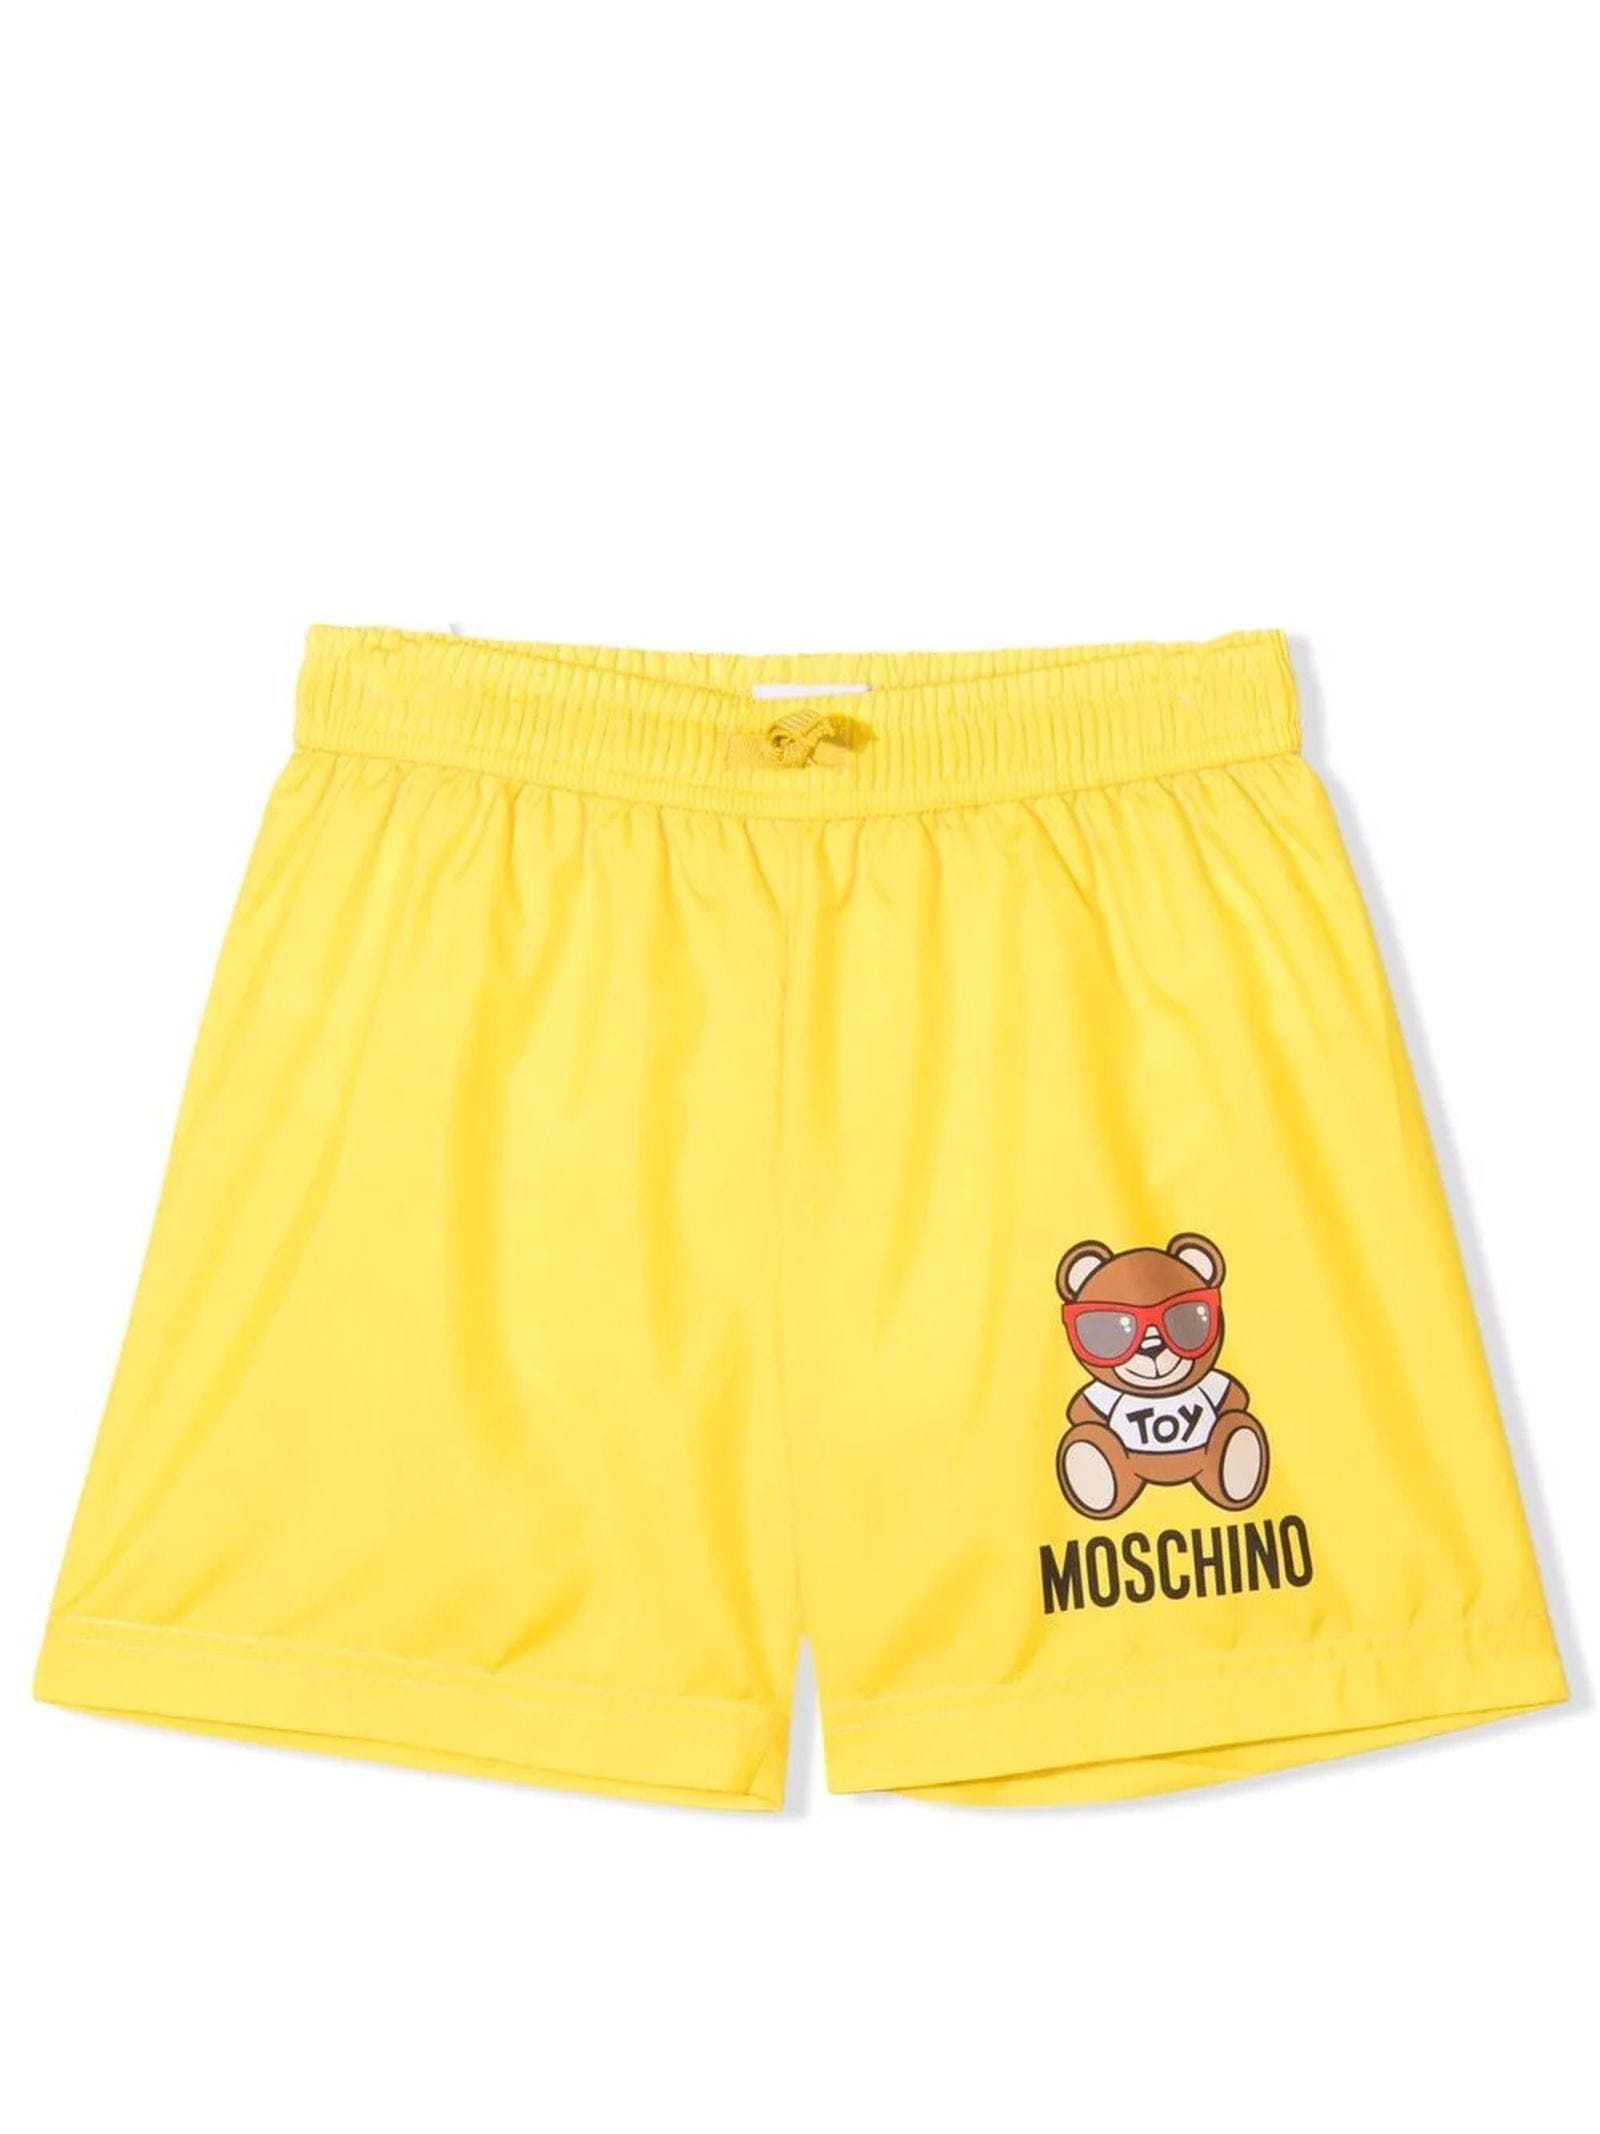 Moschino Yellow Polyester Swimsuit